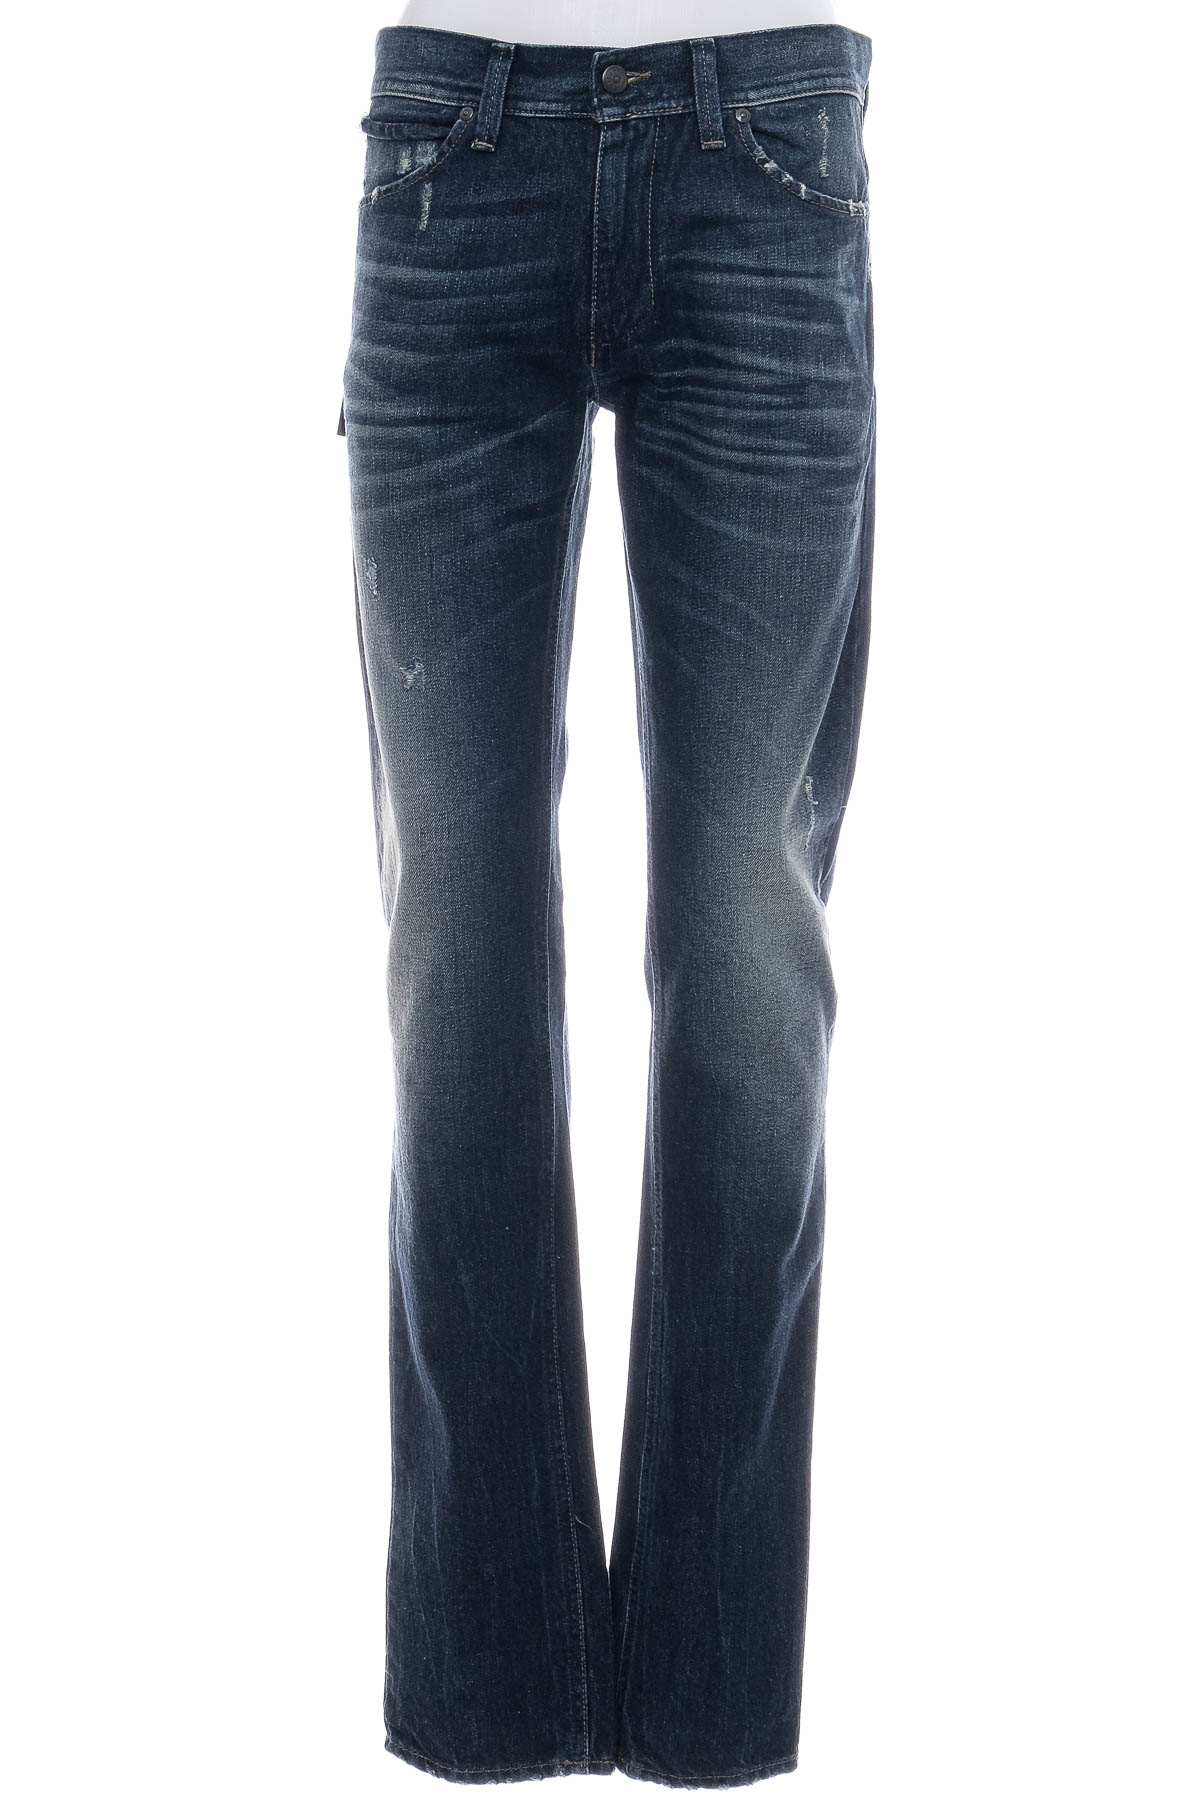 Men's jeans - Sisley - 0